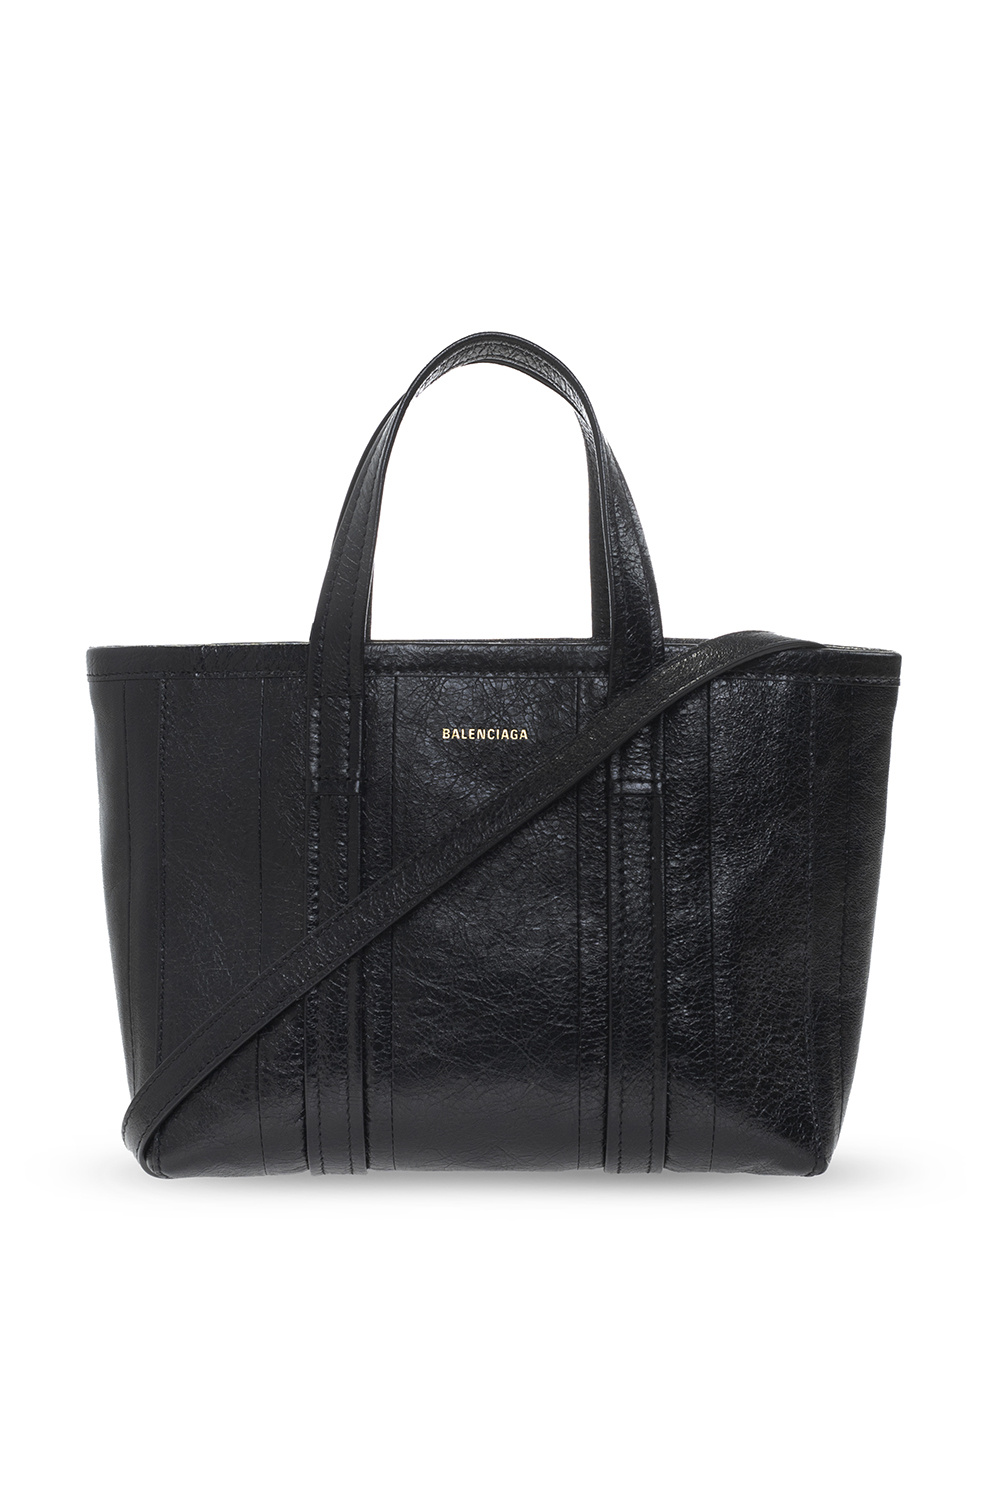 Balenciaga ‘Barbes Small’ shoulder bag